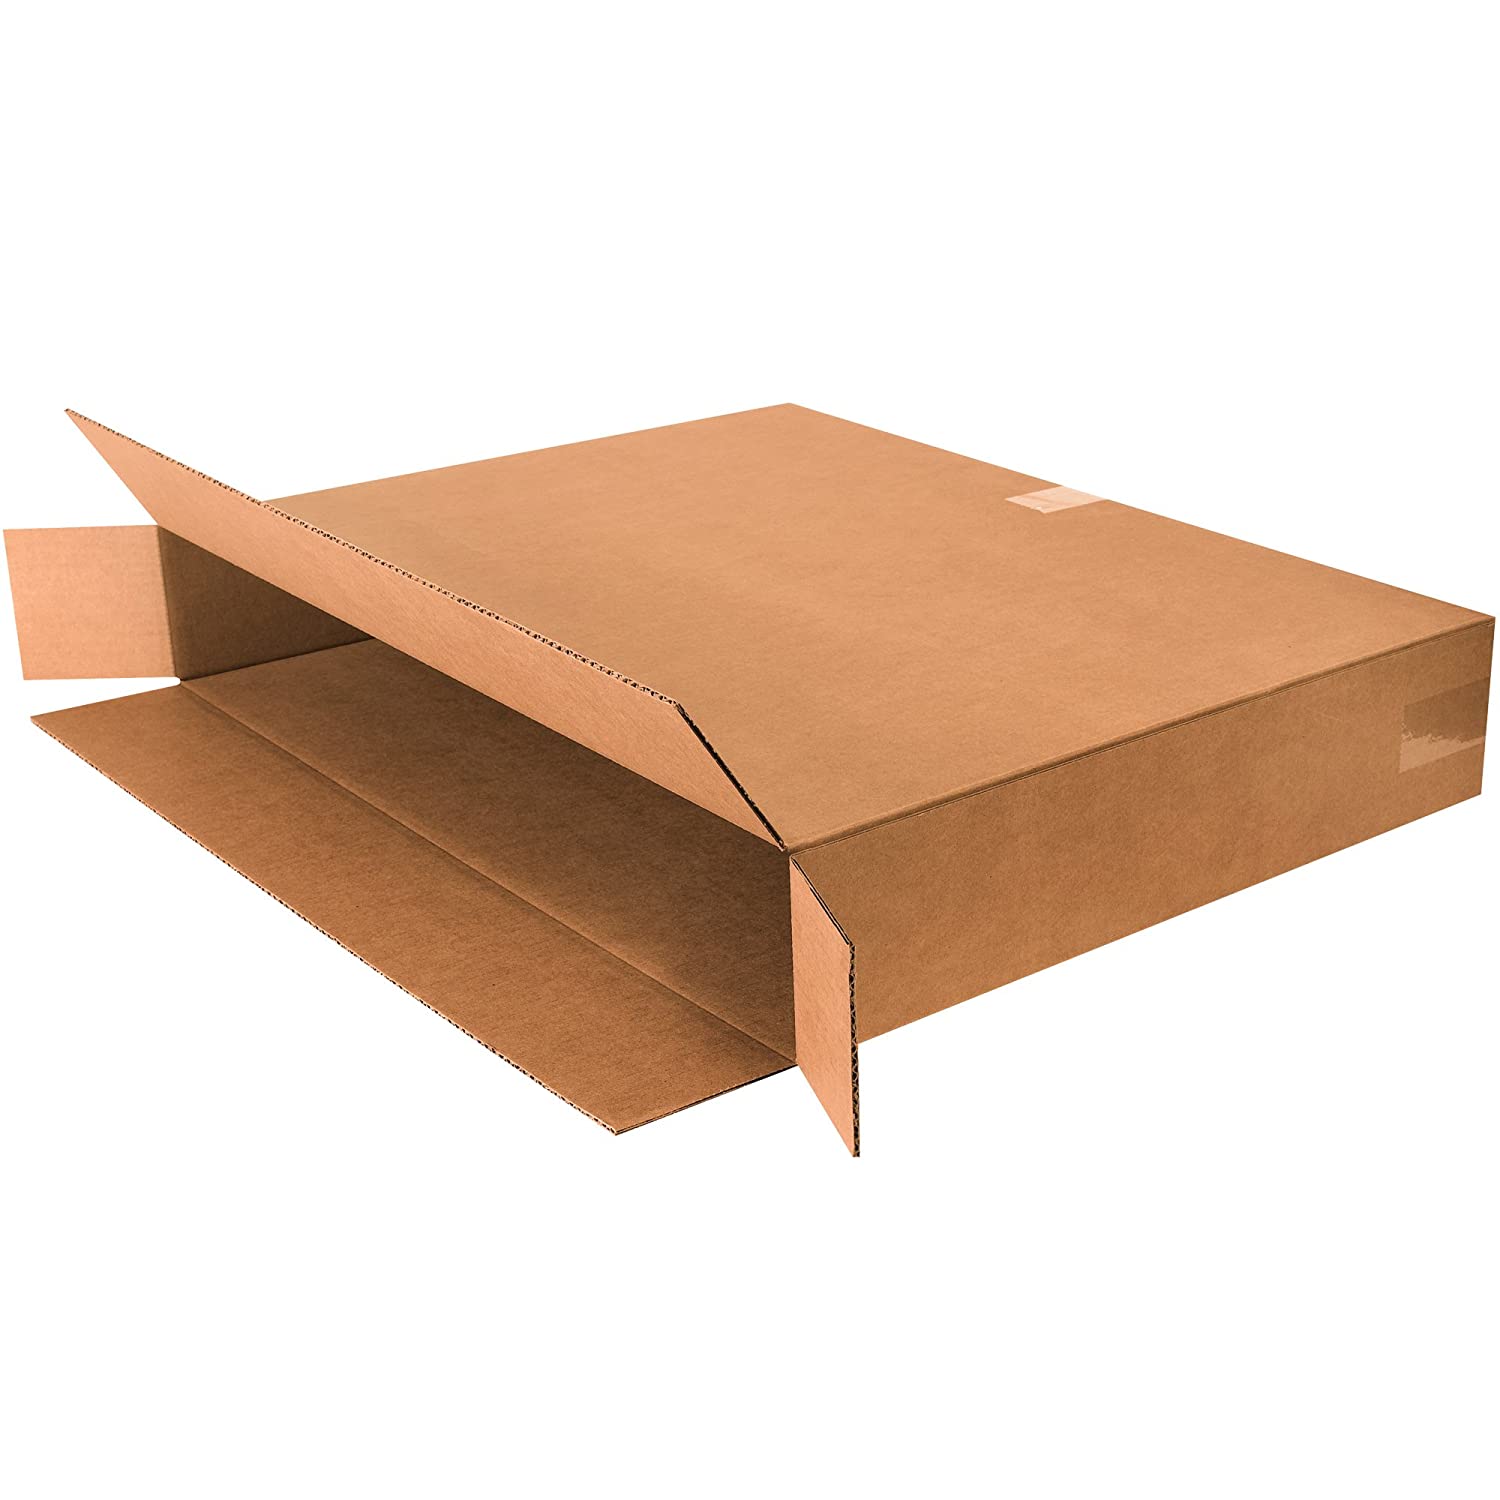 BOX USA Side Loading Boxes